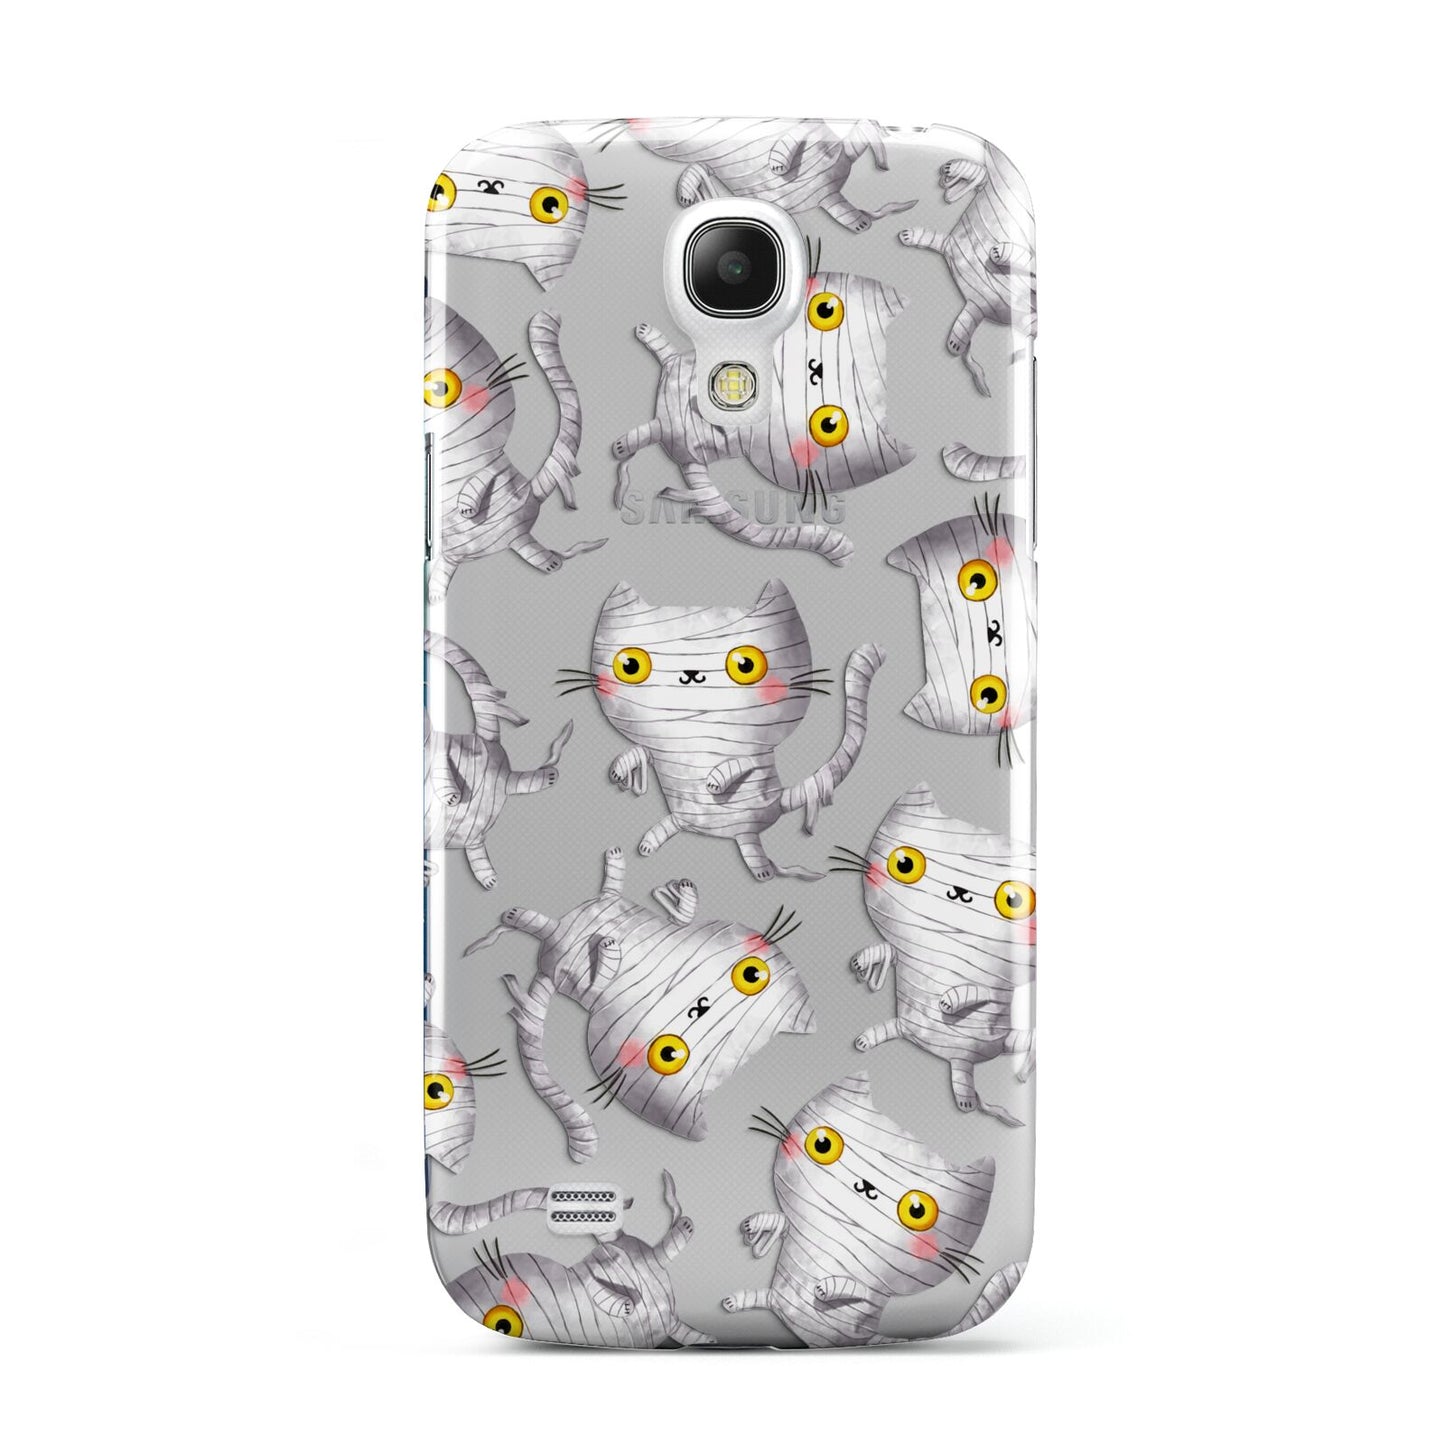 Mummy Cats Samsung Galaxy S4 Mini Case